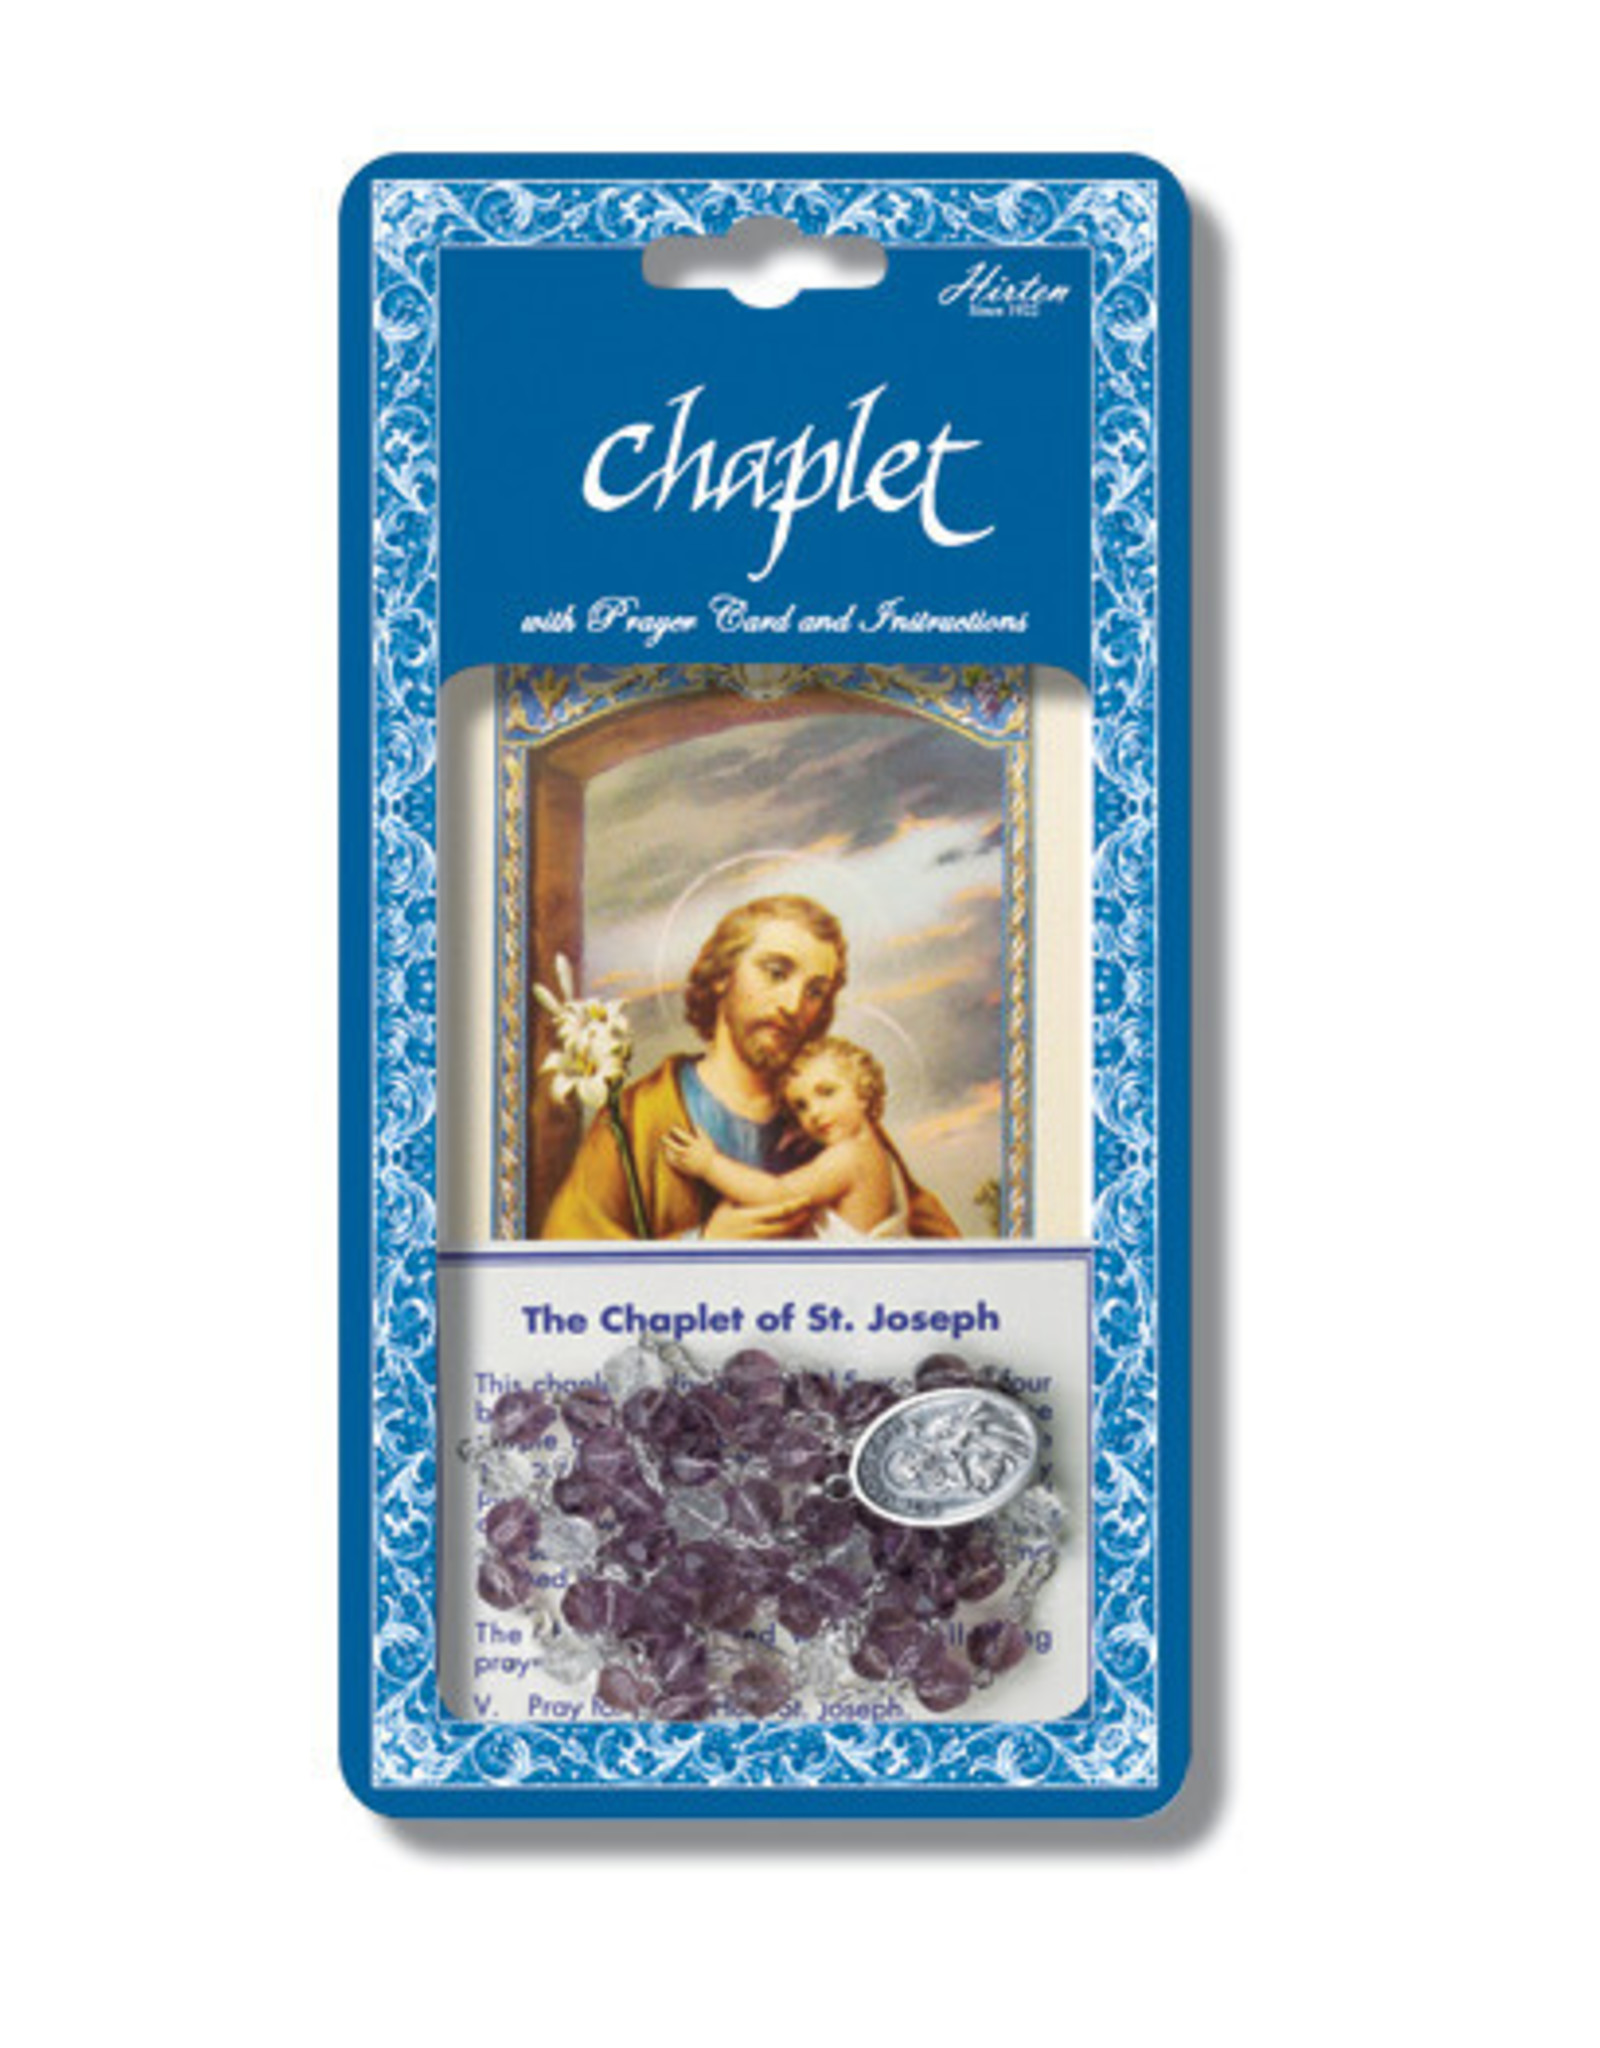 Hirten St. Joseph Chaplet with Prayer Card and Instructions